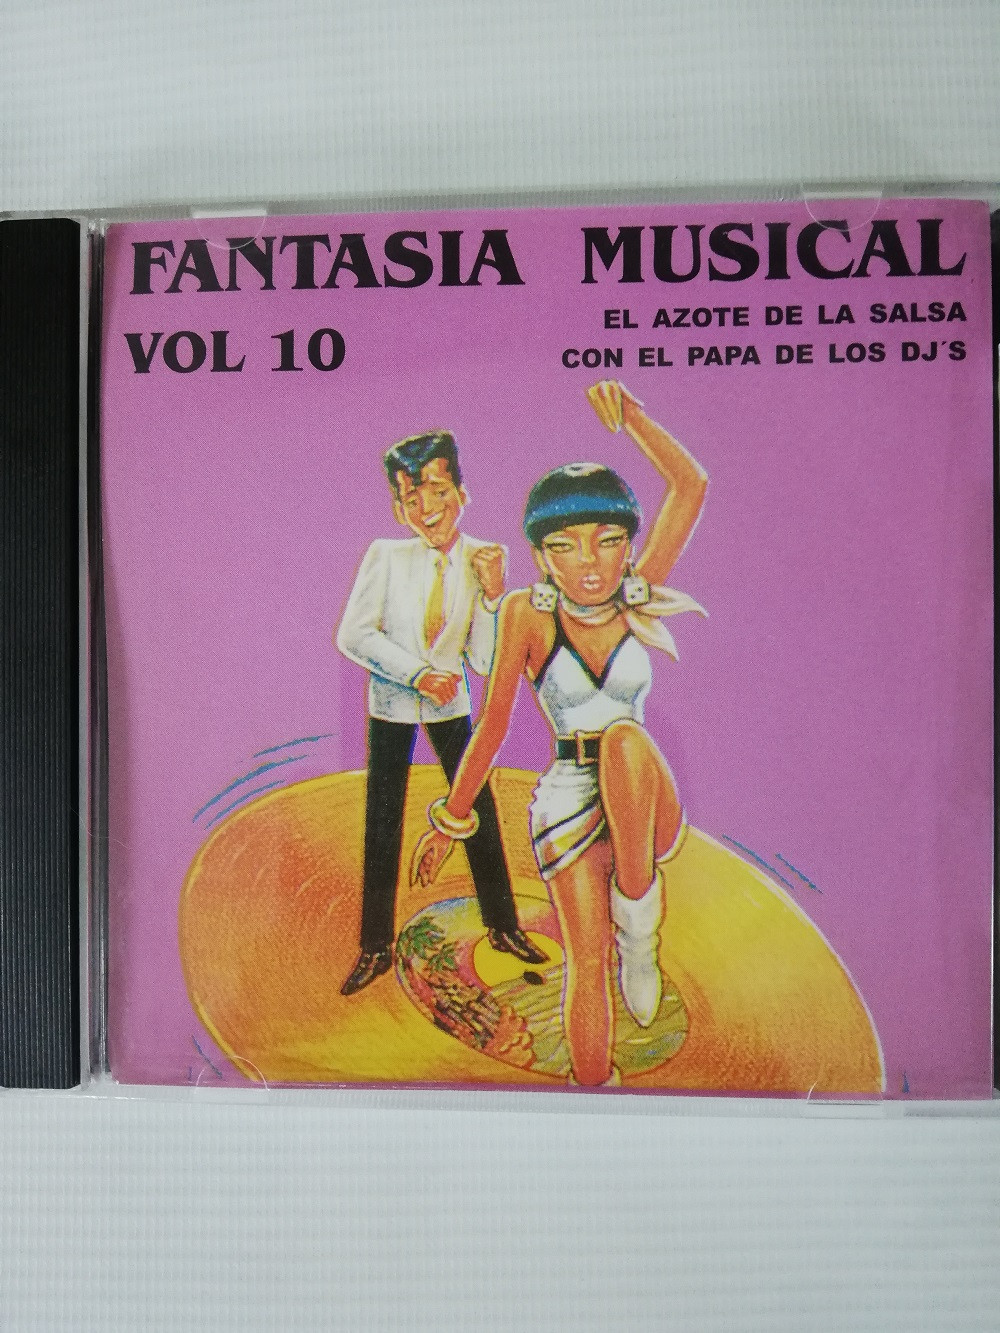 Imagen CD FANTASIA MUSICAL - FANTASIA MUSICAL VOL. 10 1